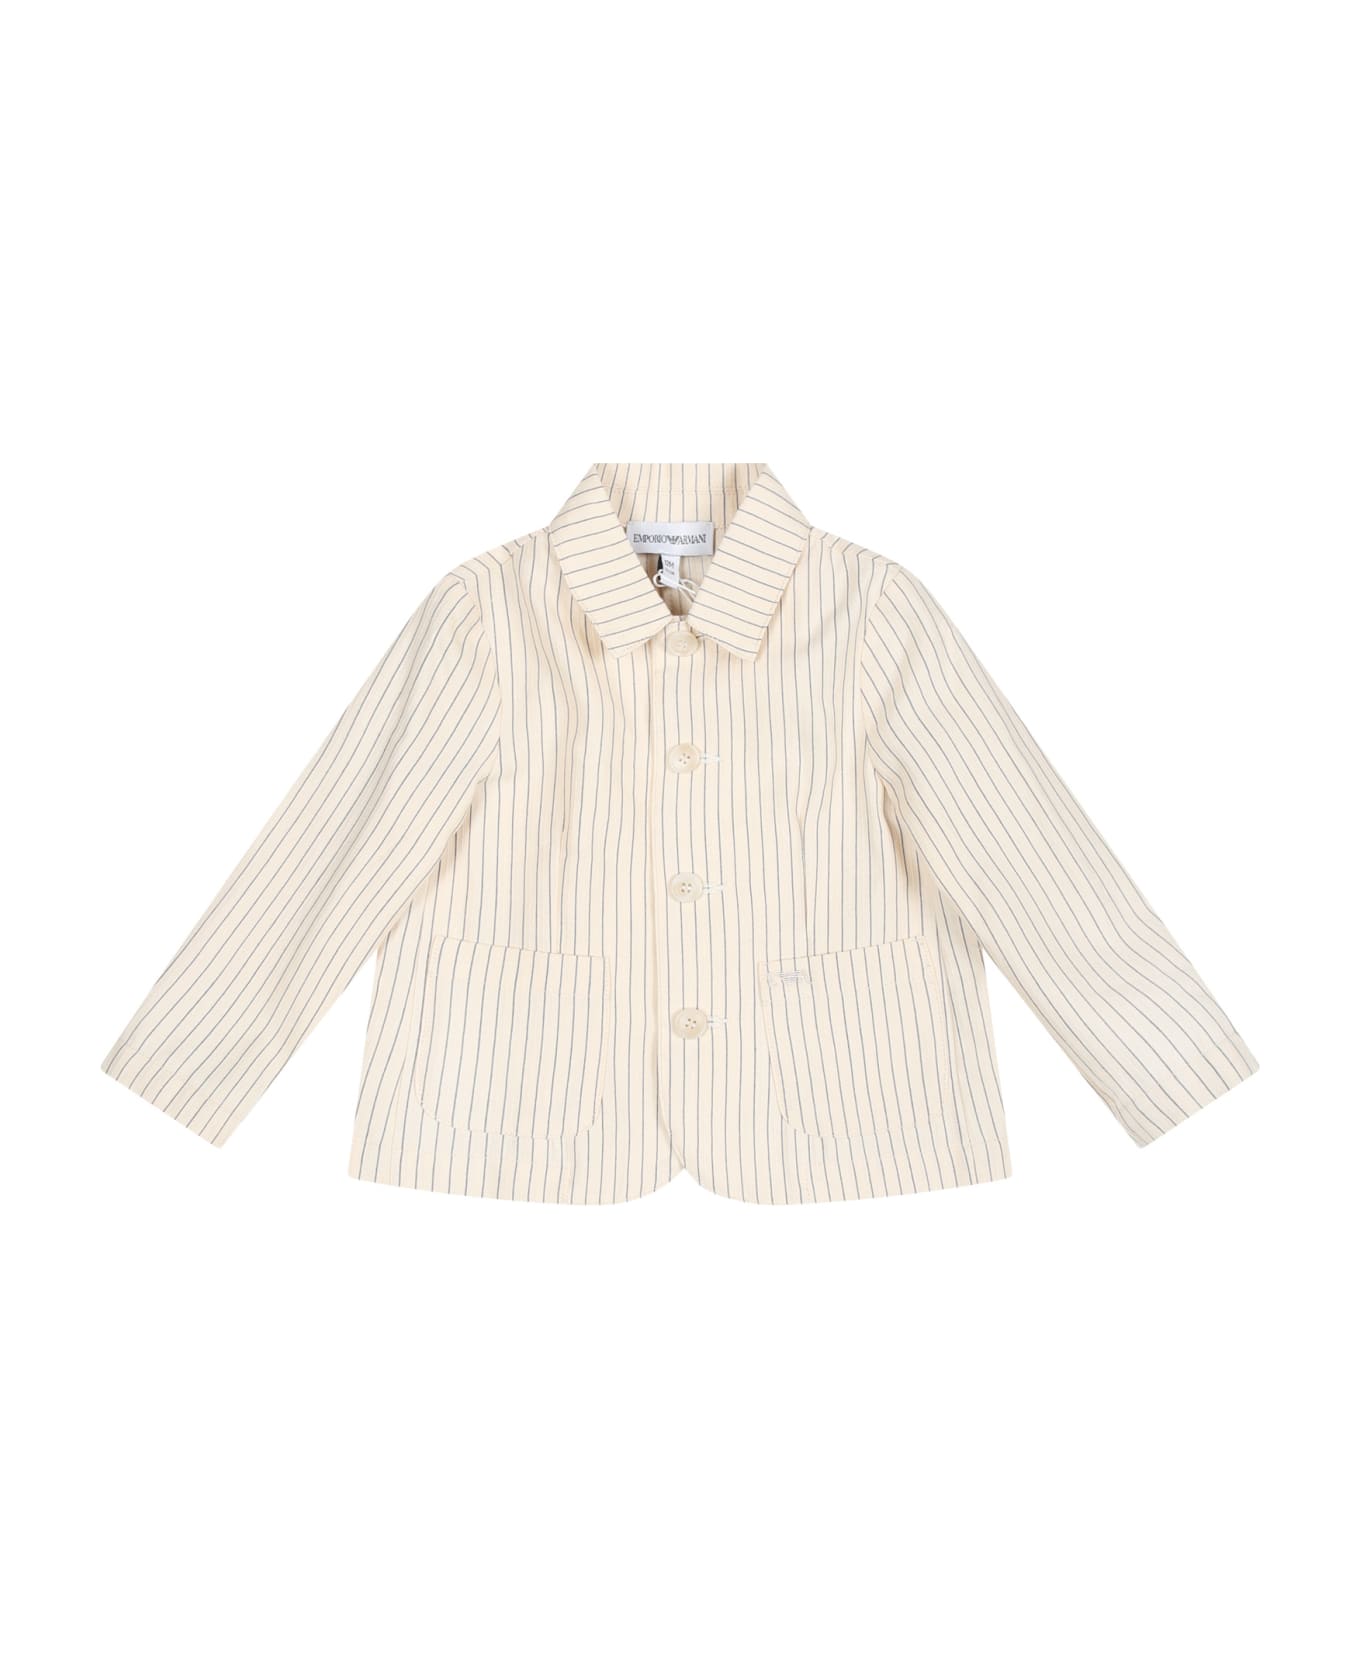 Emporio Armani Ivory Jacket For Baby Boy - Ivory